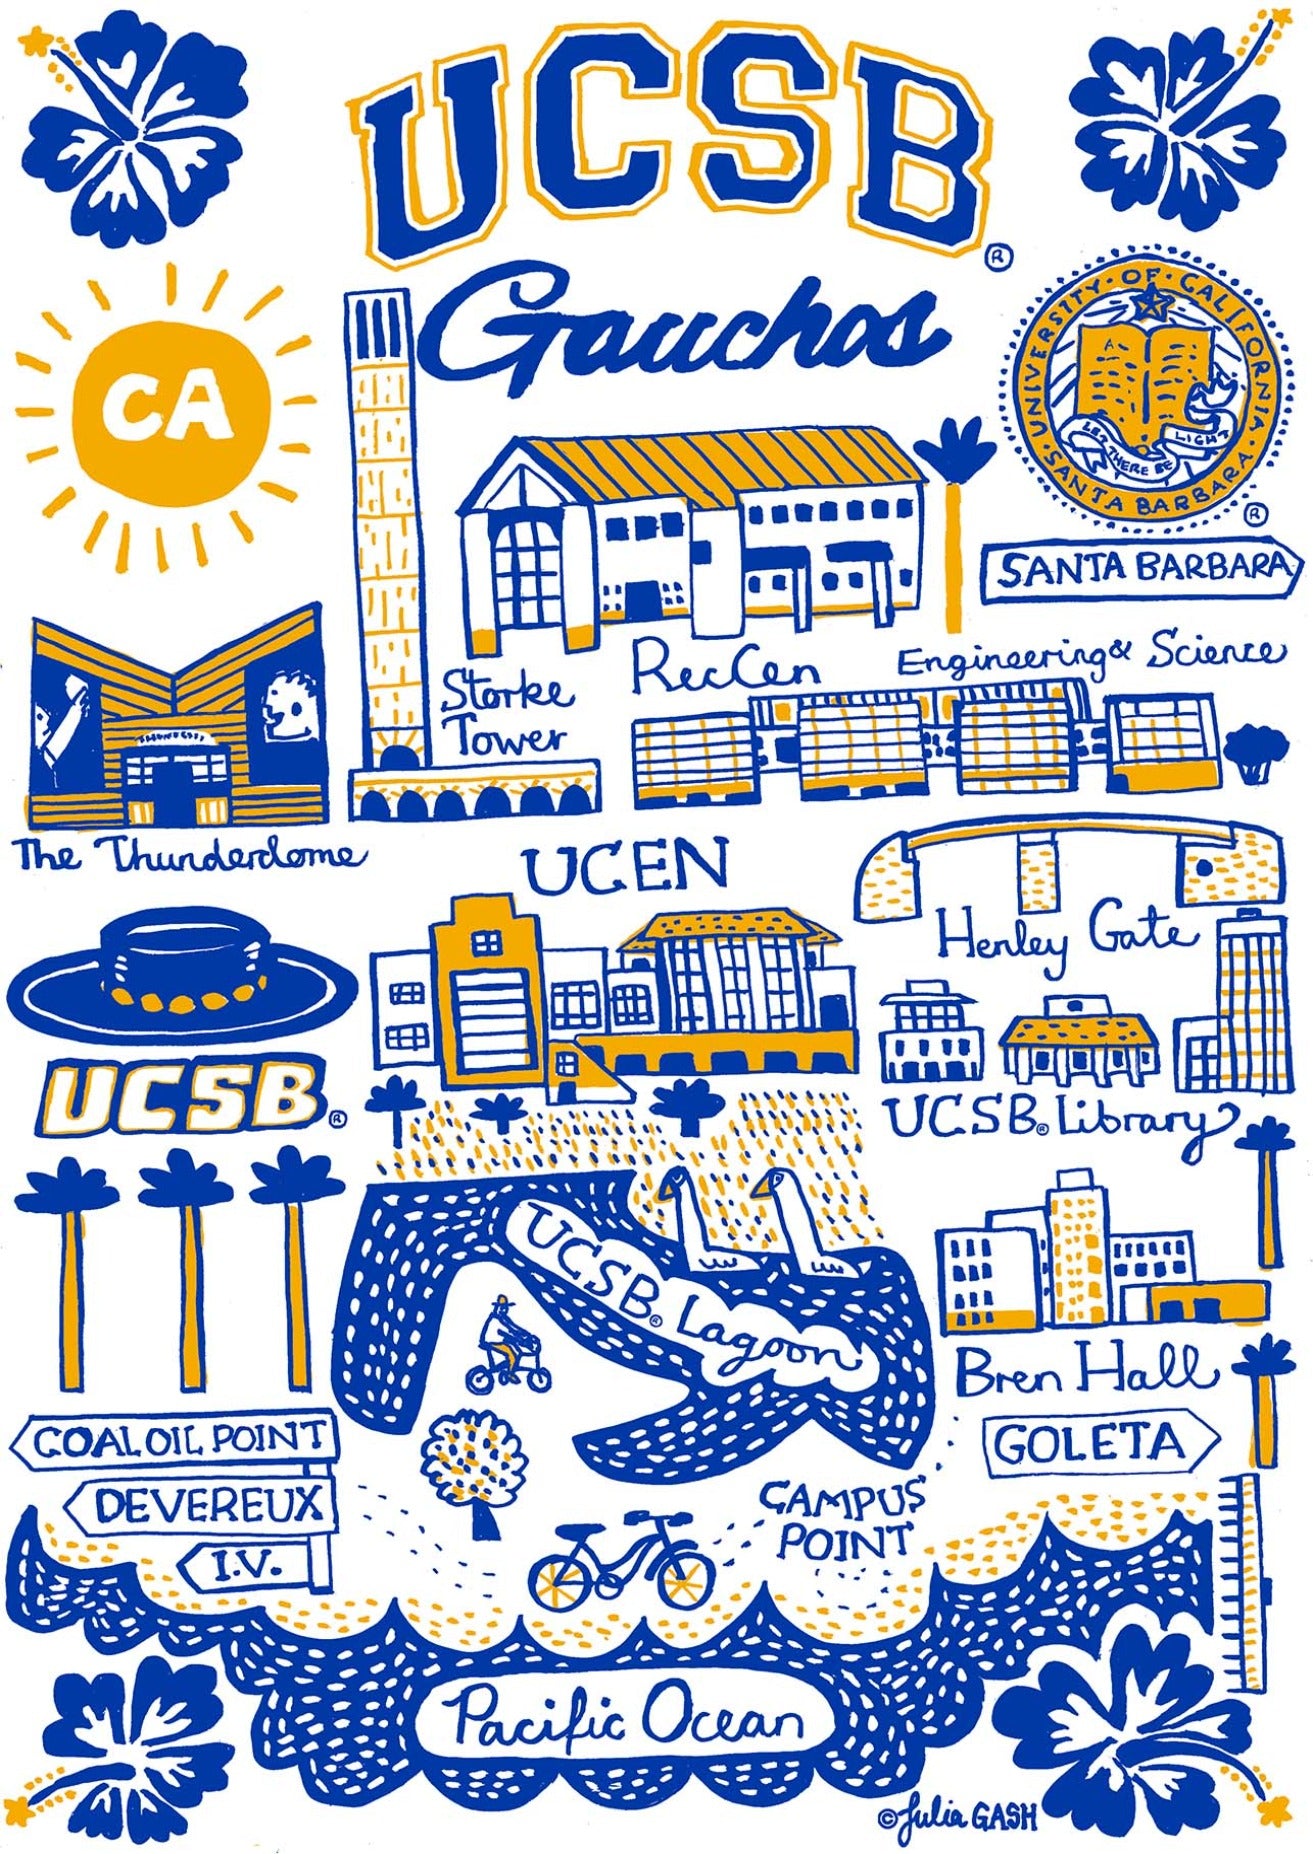 University of California - Santa Barbara by Julia Gash